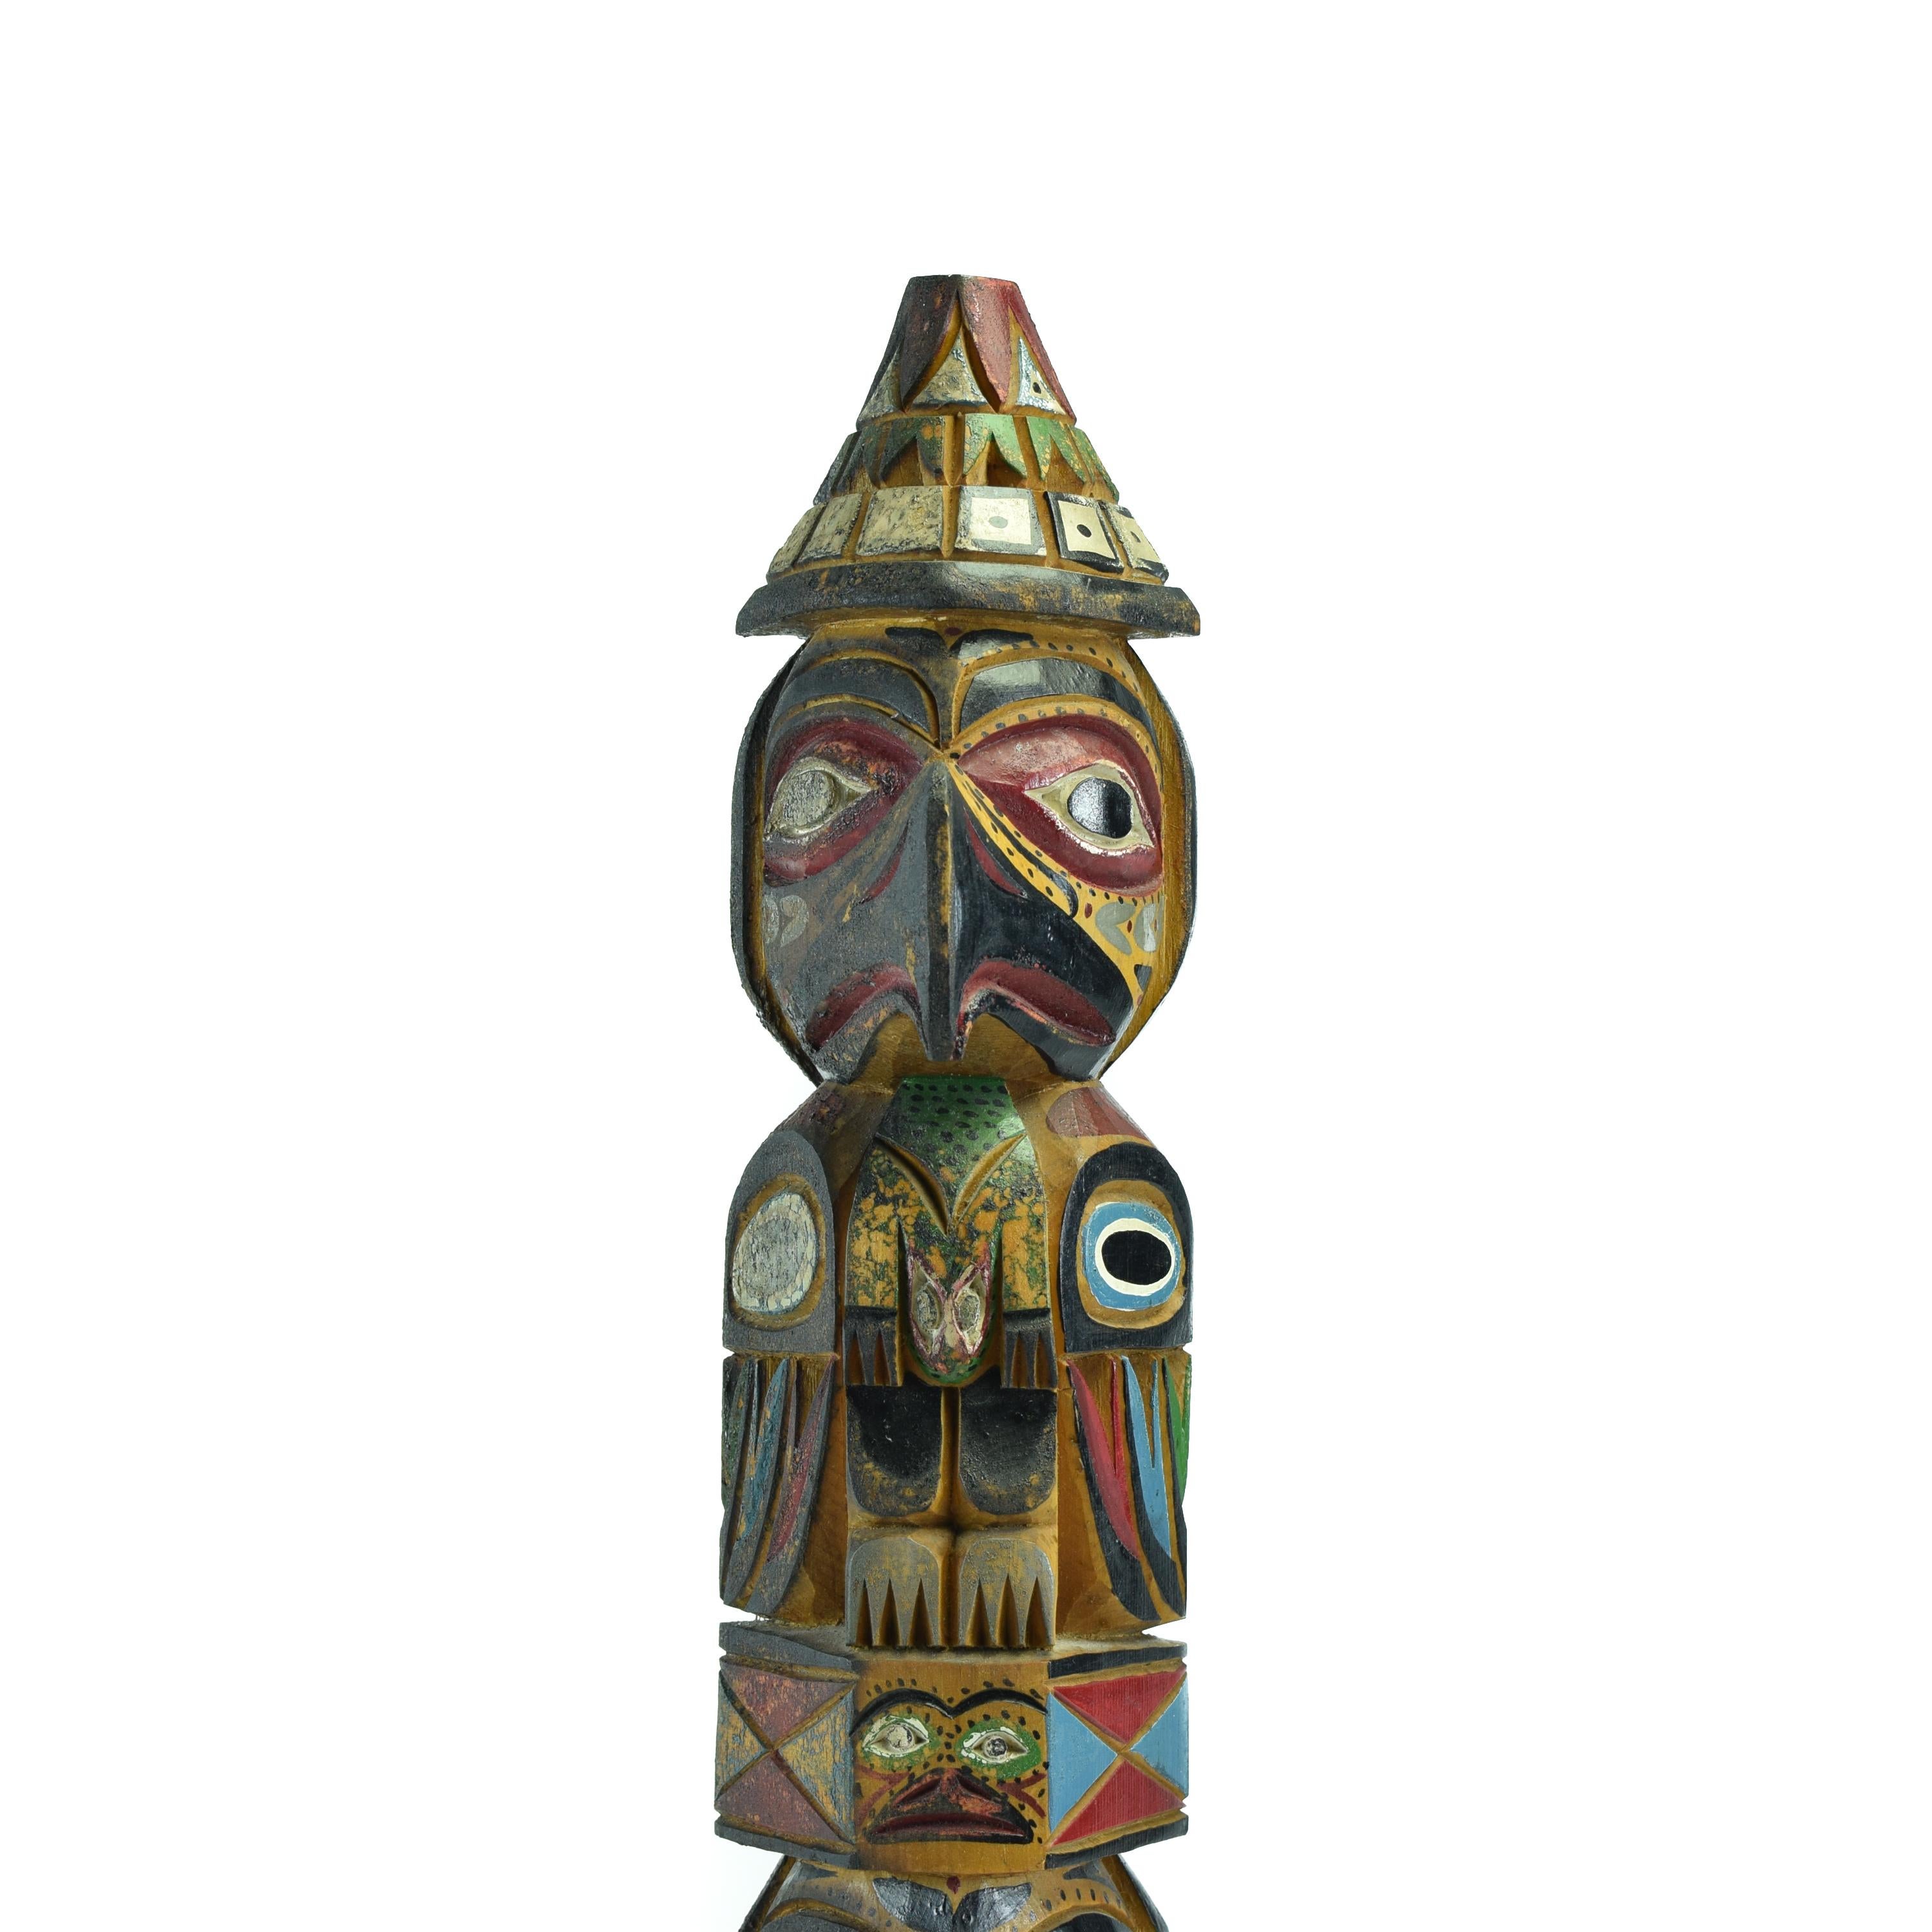 Ditidaht/Nuu-Chah-Nulth Totem von Raymond Williams (amerikanisch) im Angebot